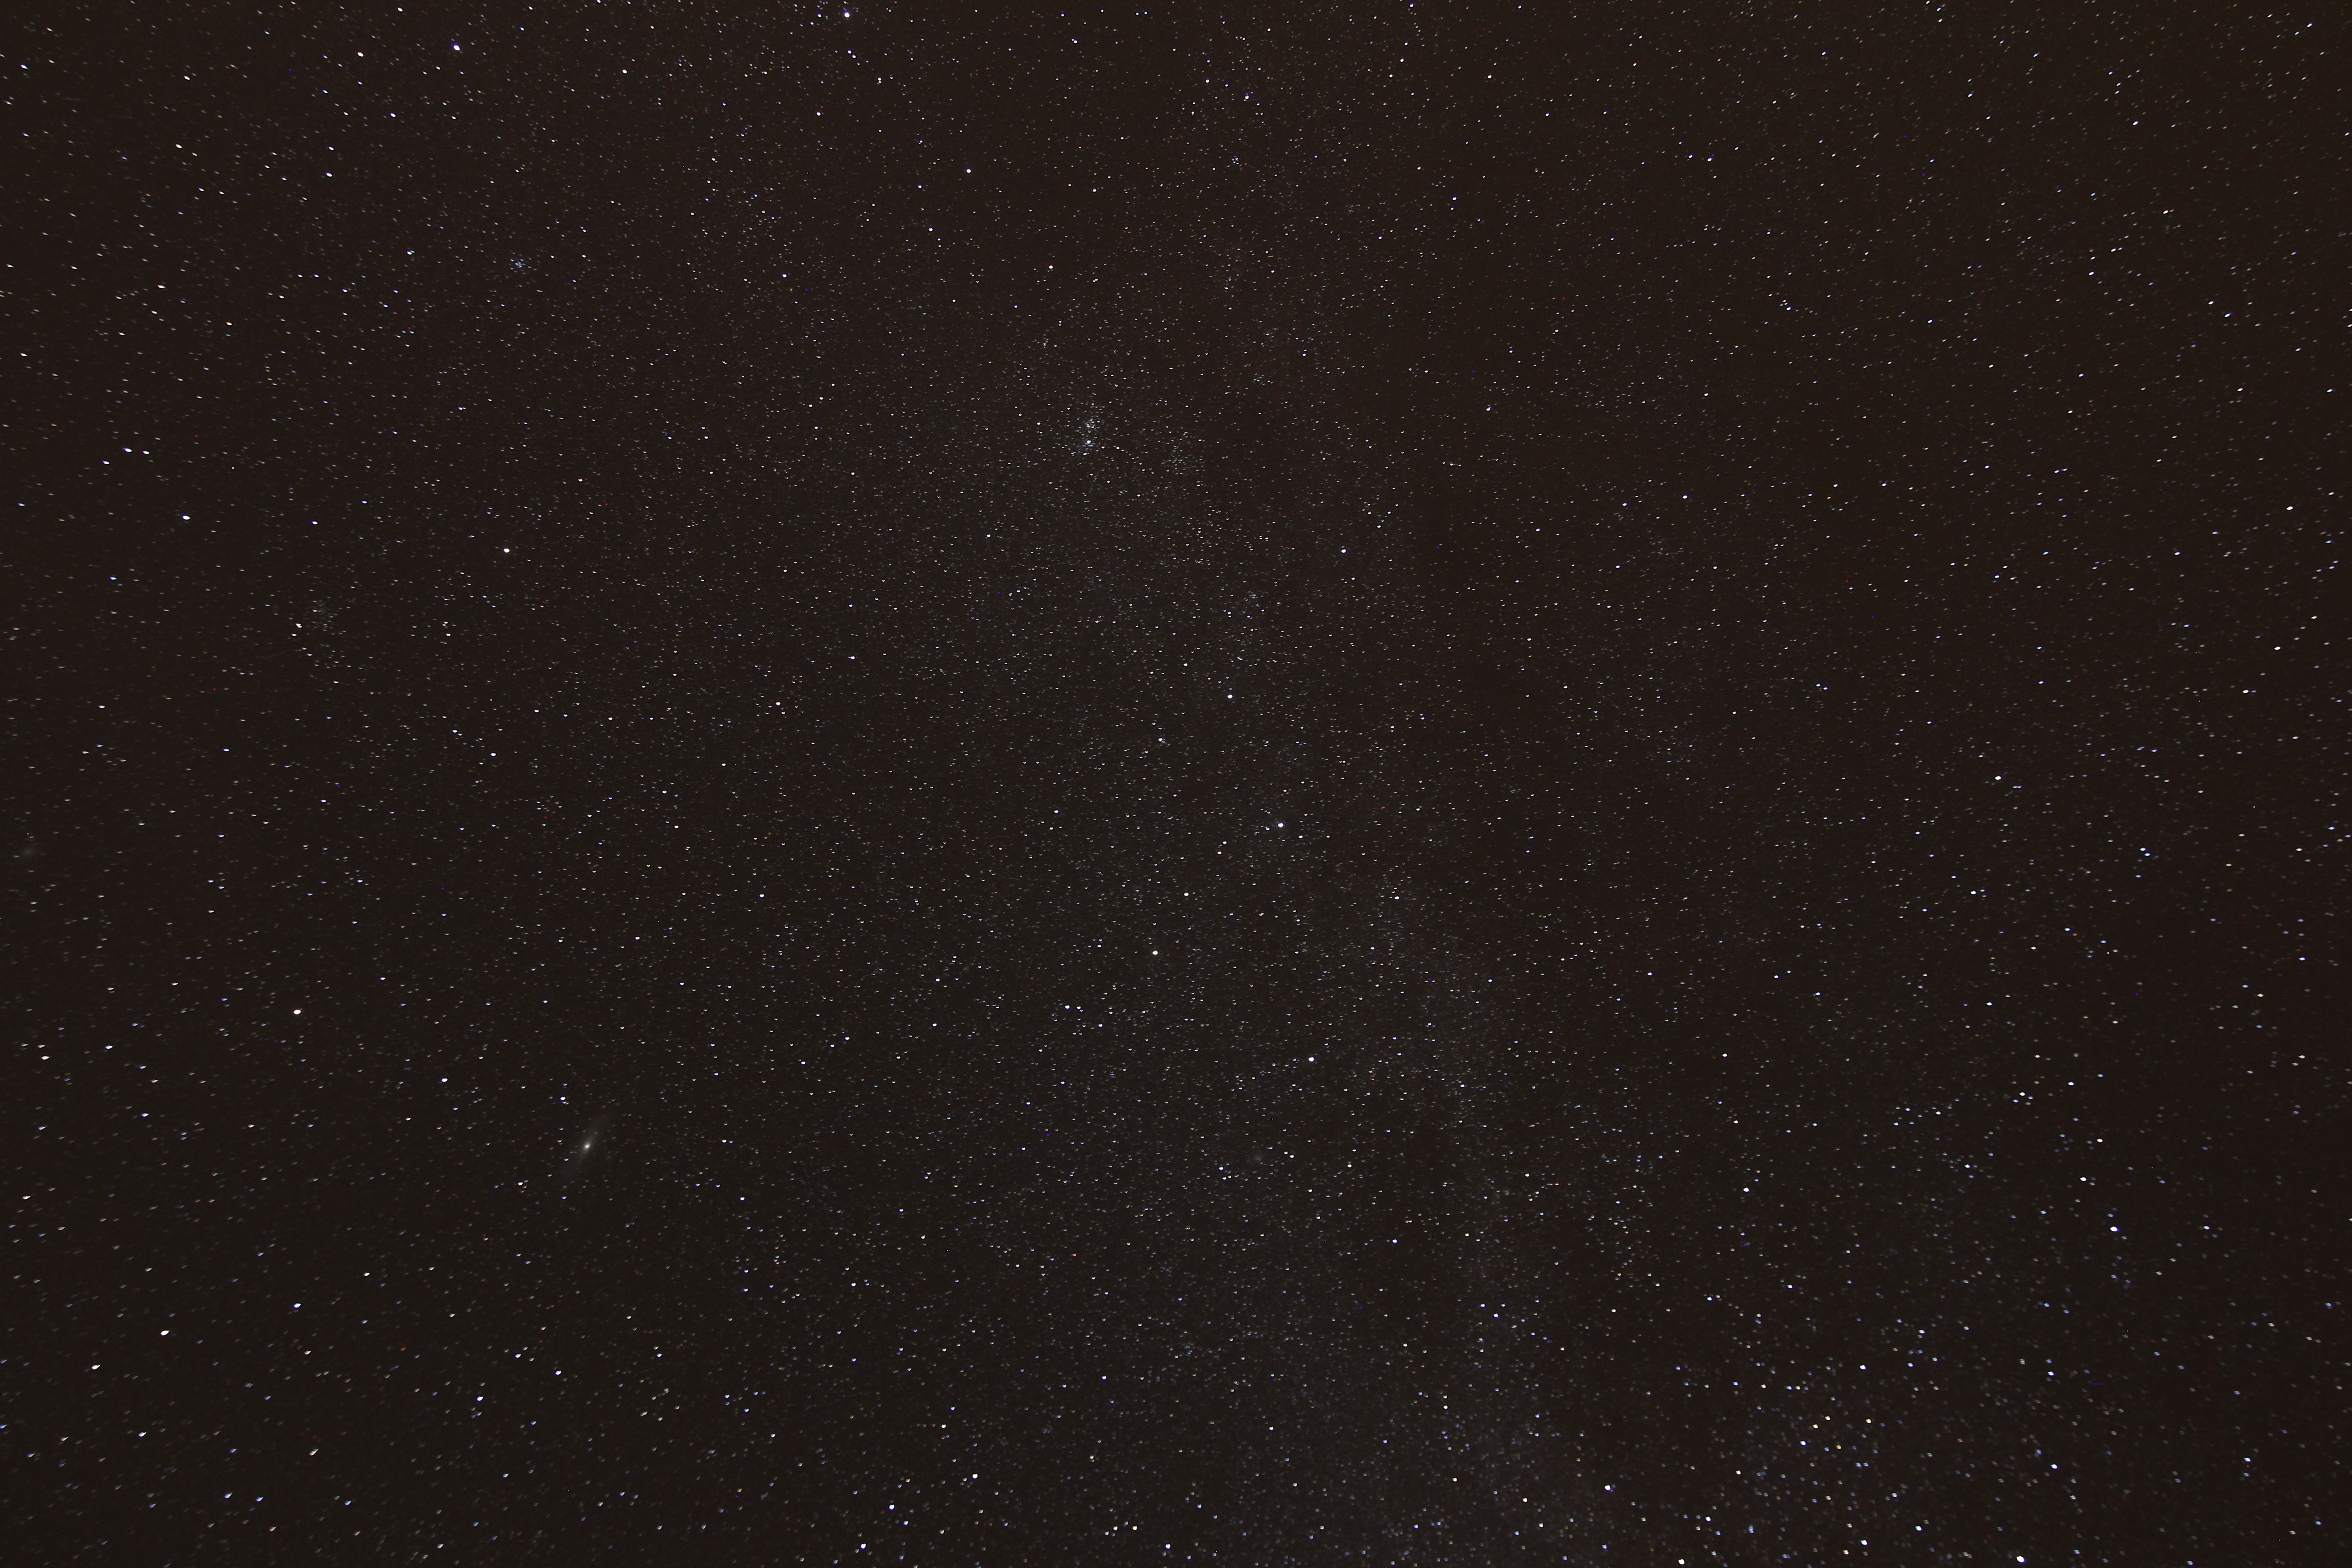 Cassiopeia-Andromeda1.jpg